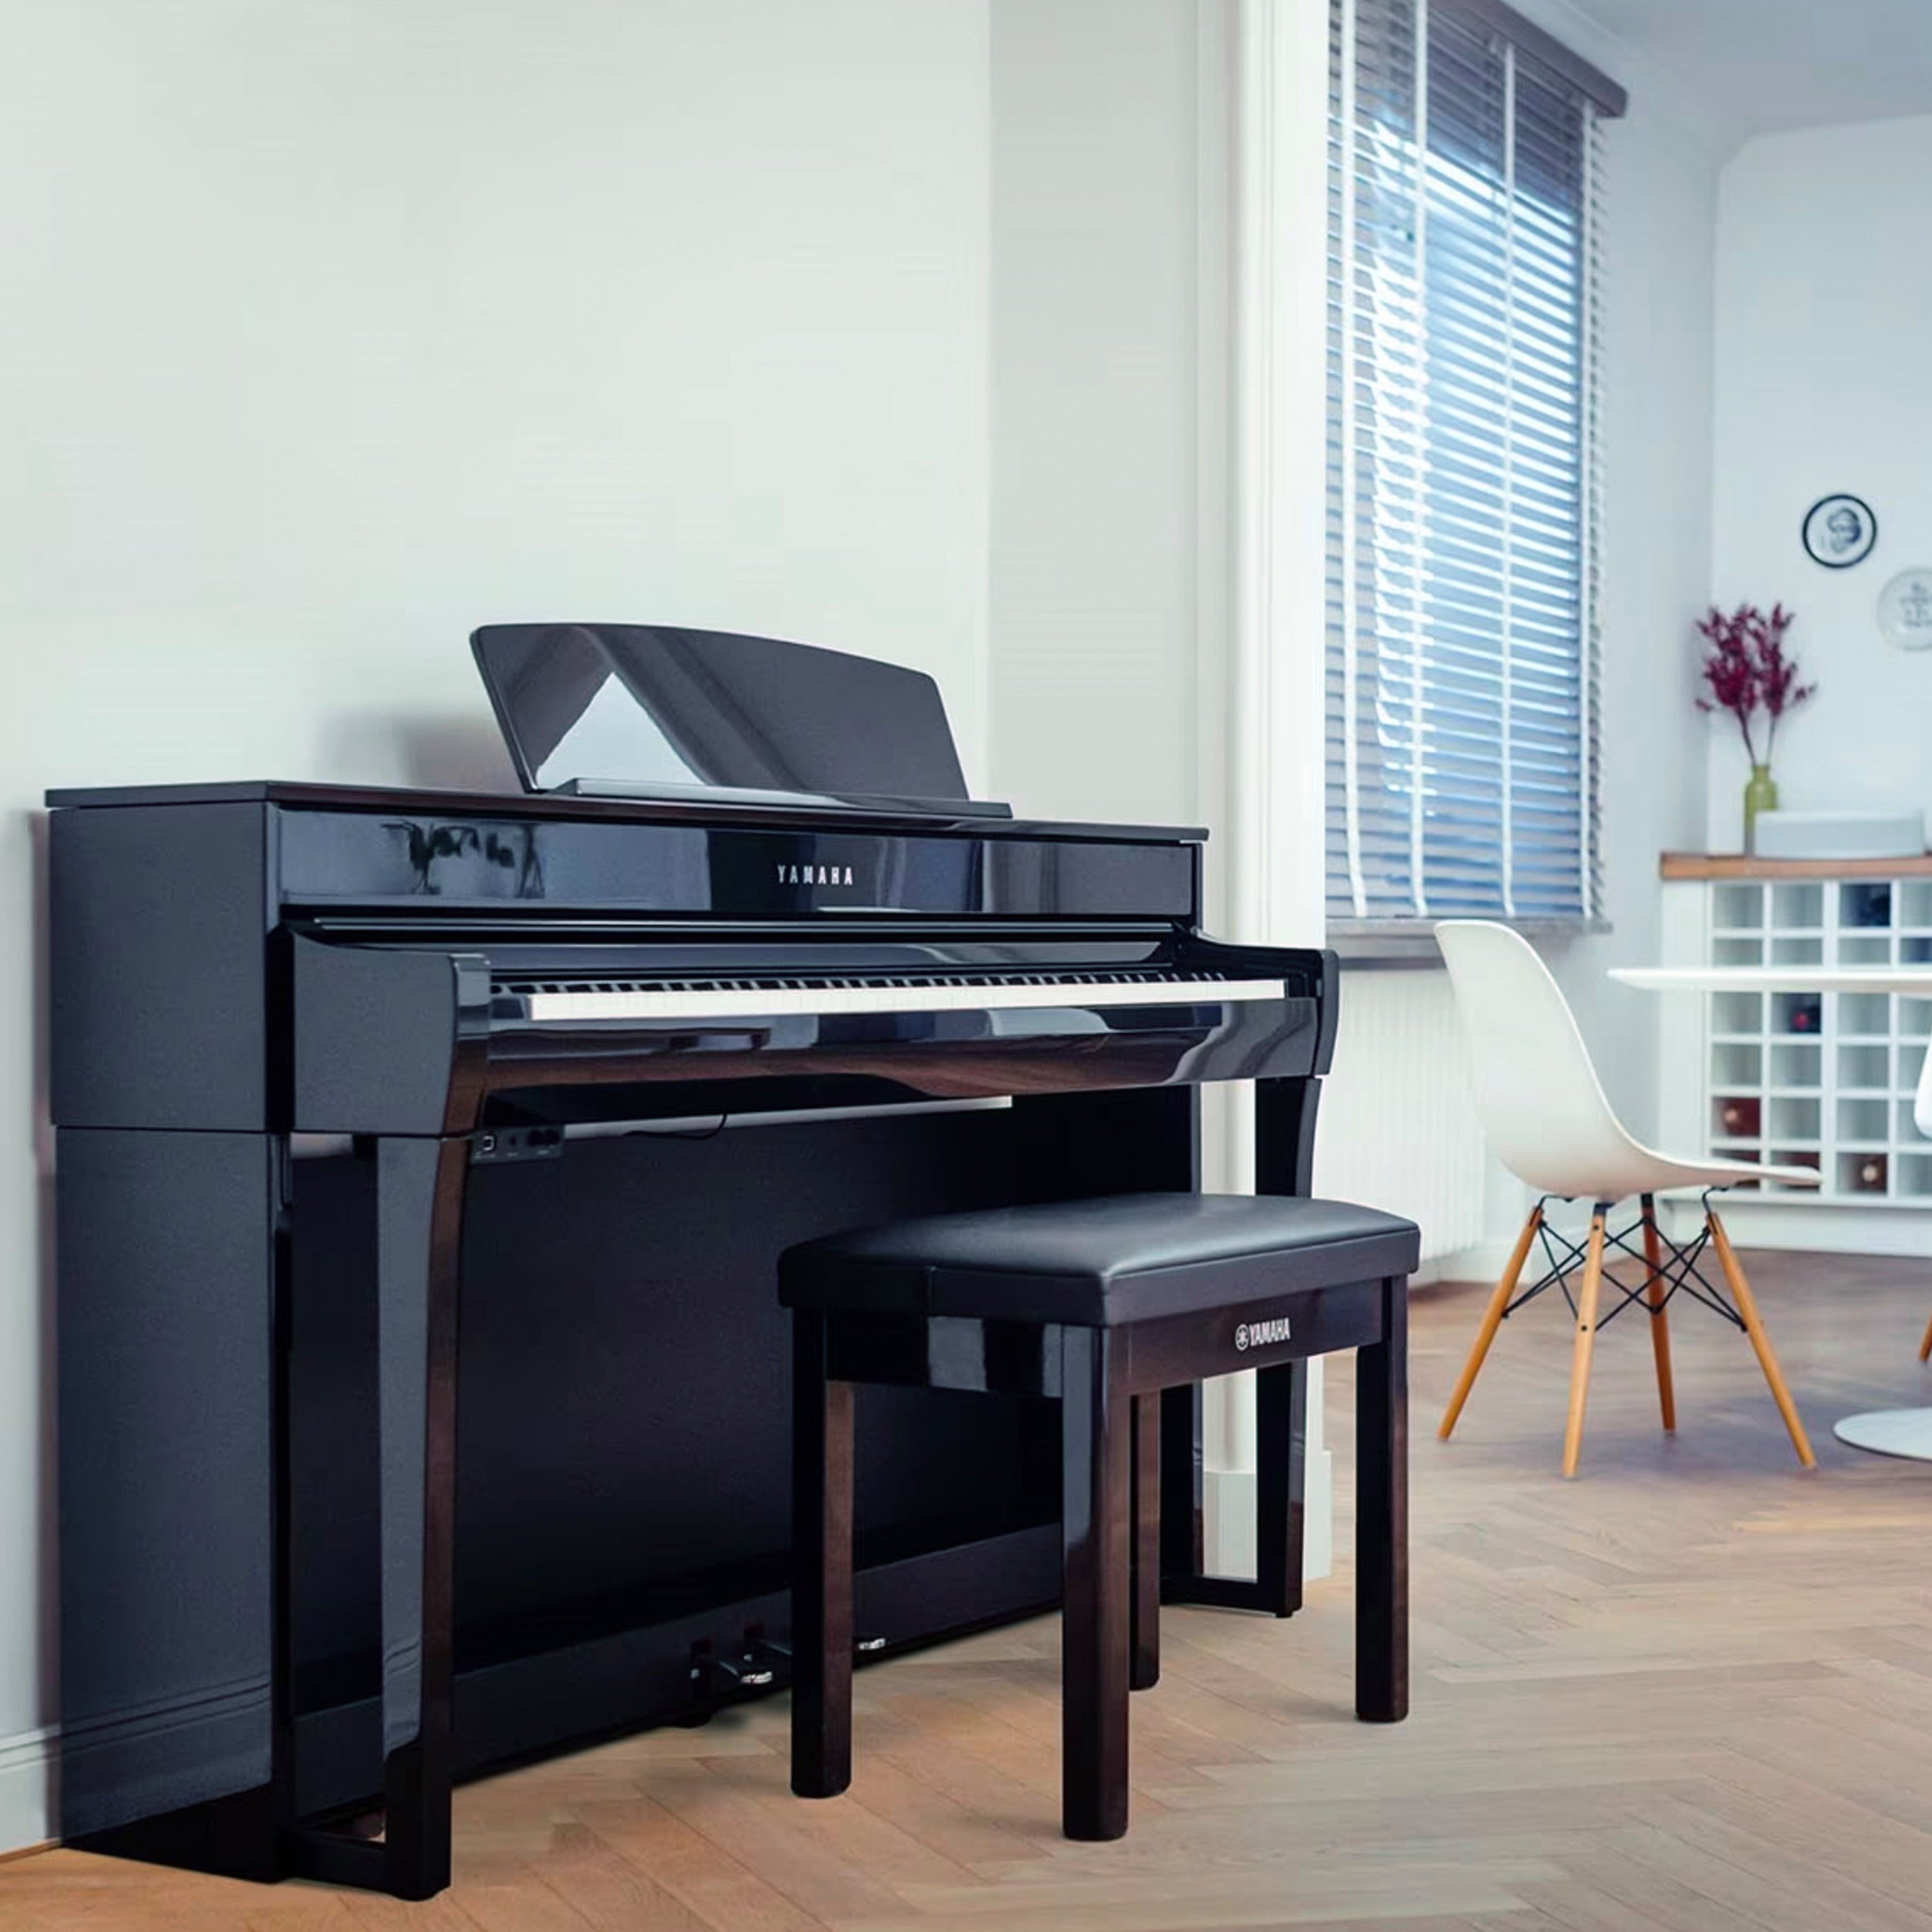 Yamaha Clavinova CLP-745 Digital Piano - Polished Ebony - in a stylish living space